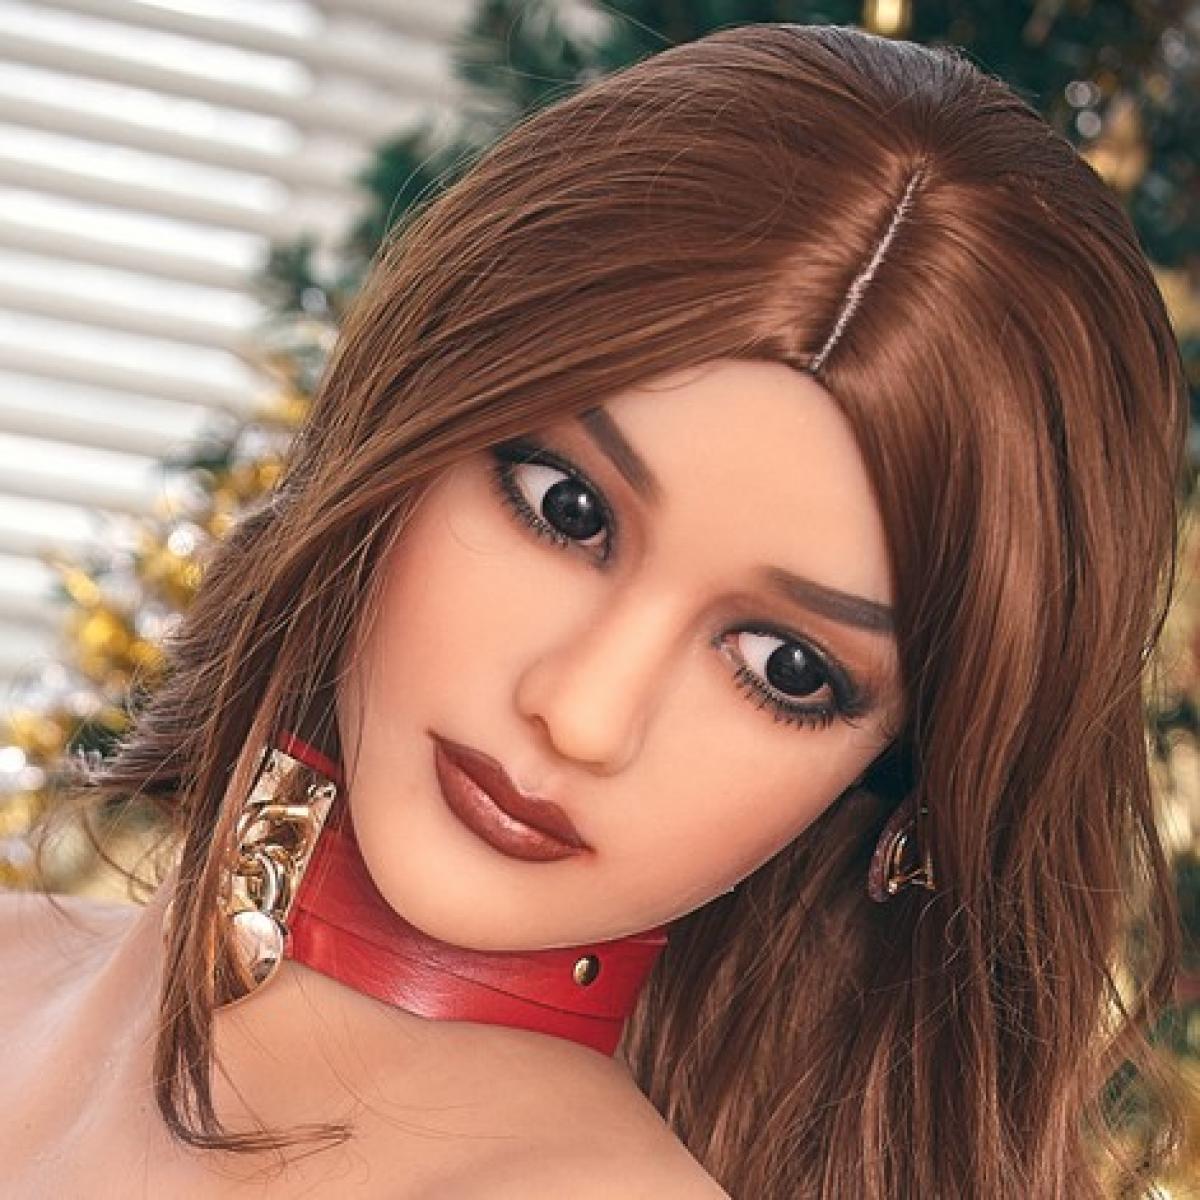 Neodoll Racy Fiona - Sex Doll Head - M16 Compatible - Tan